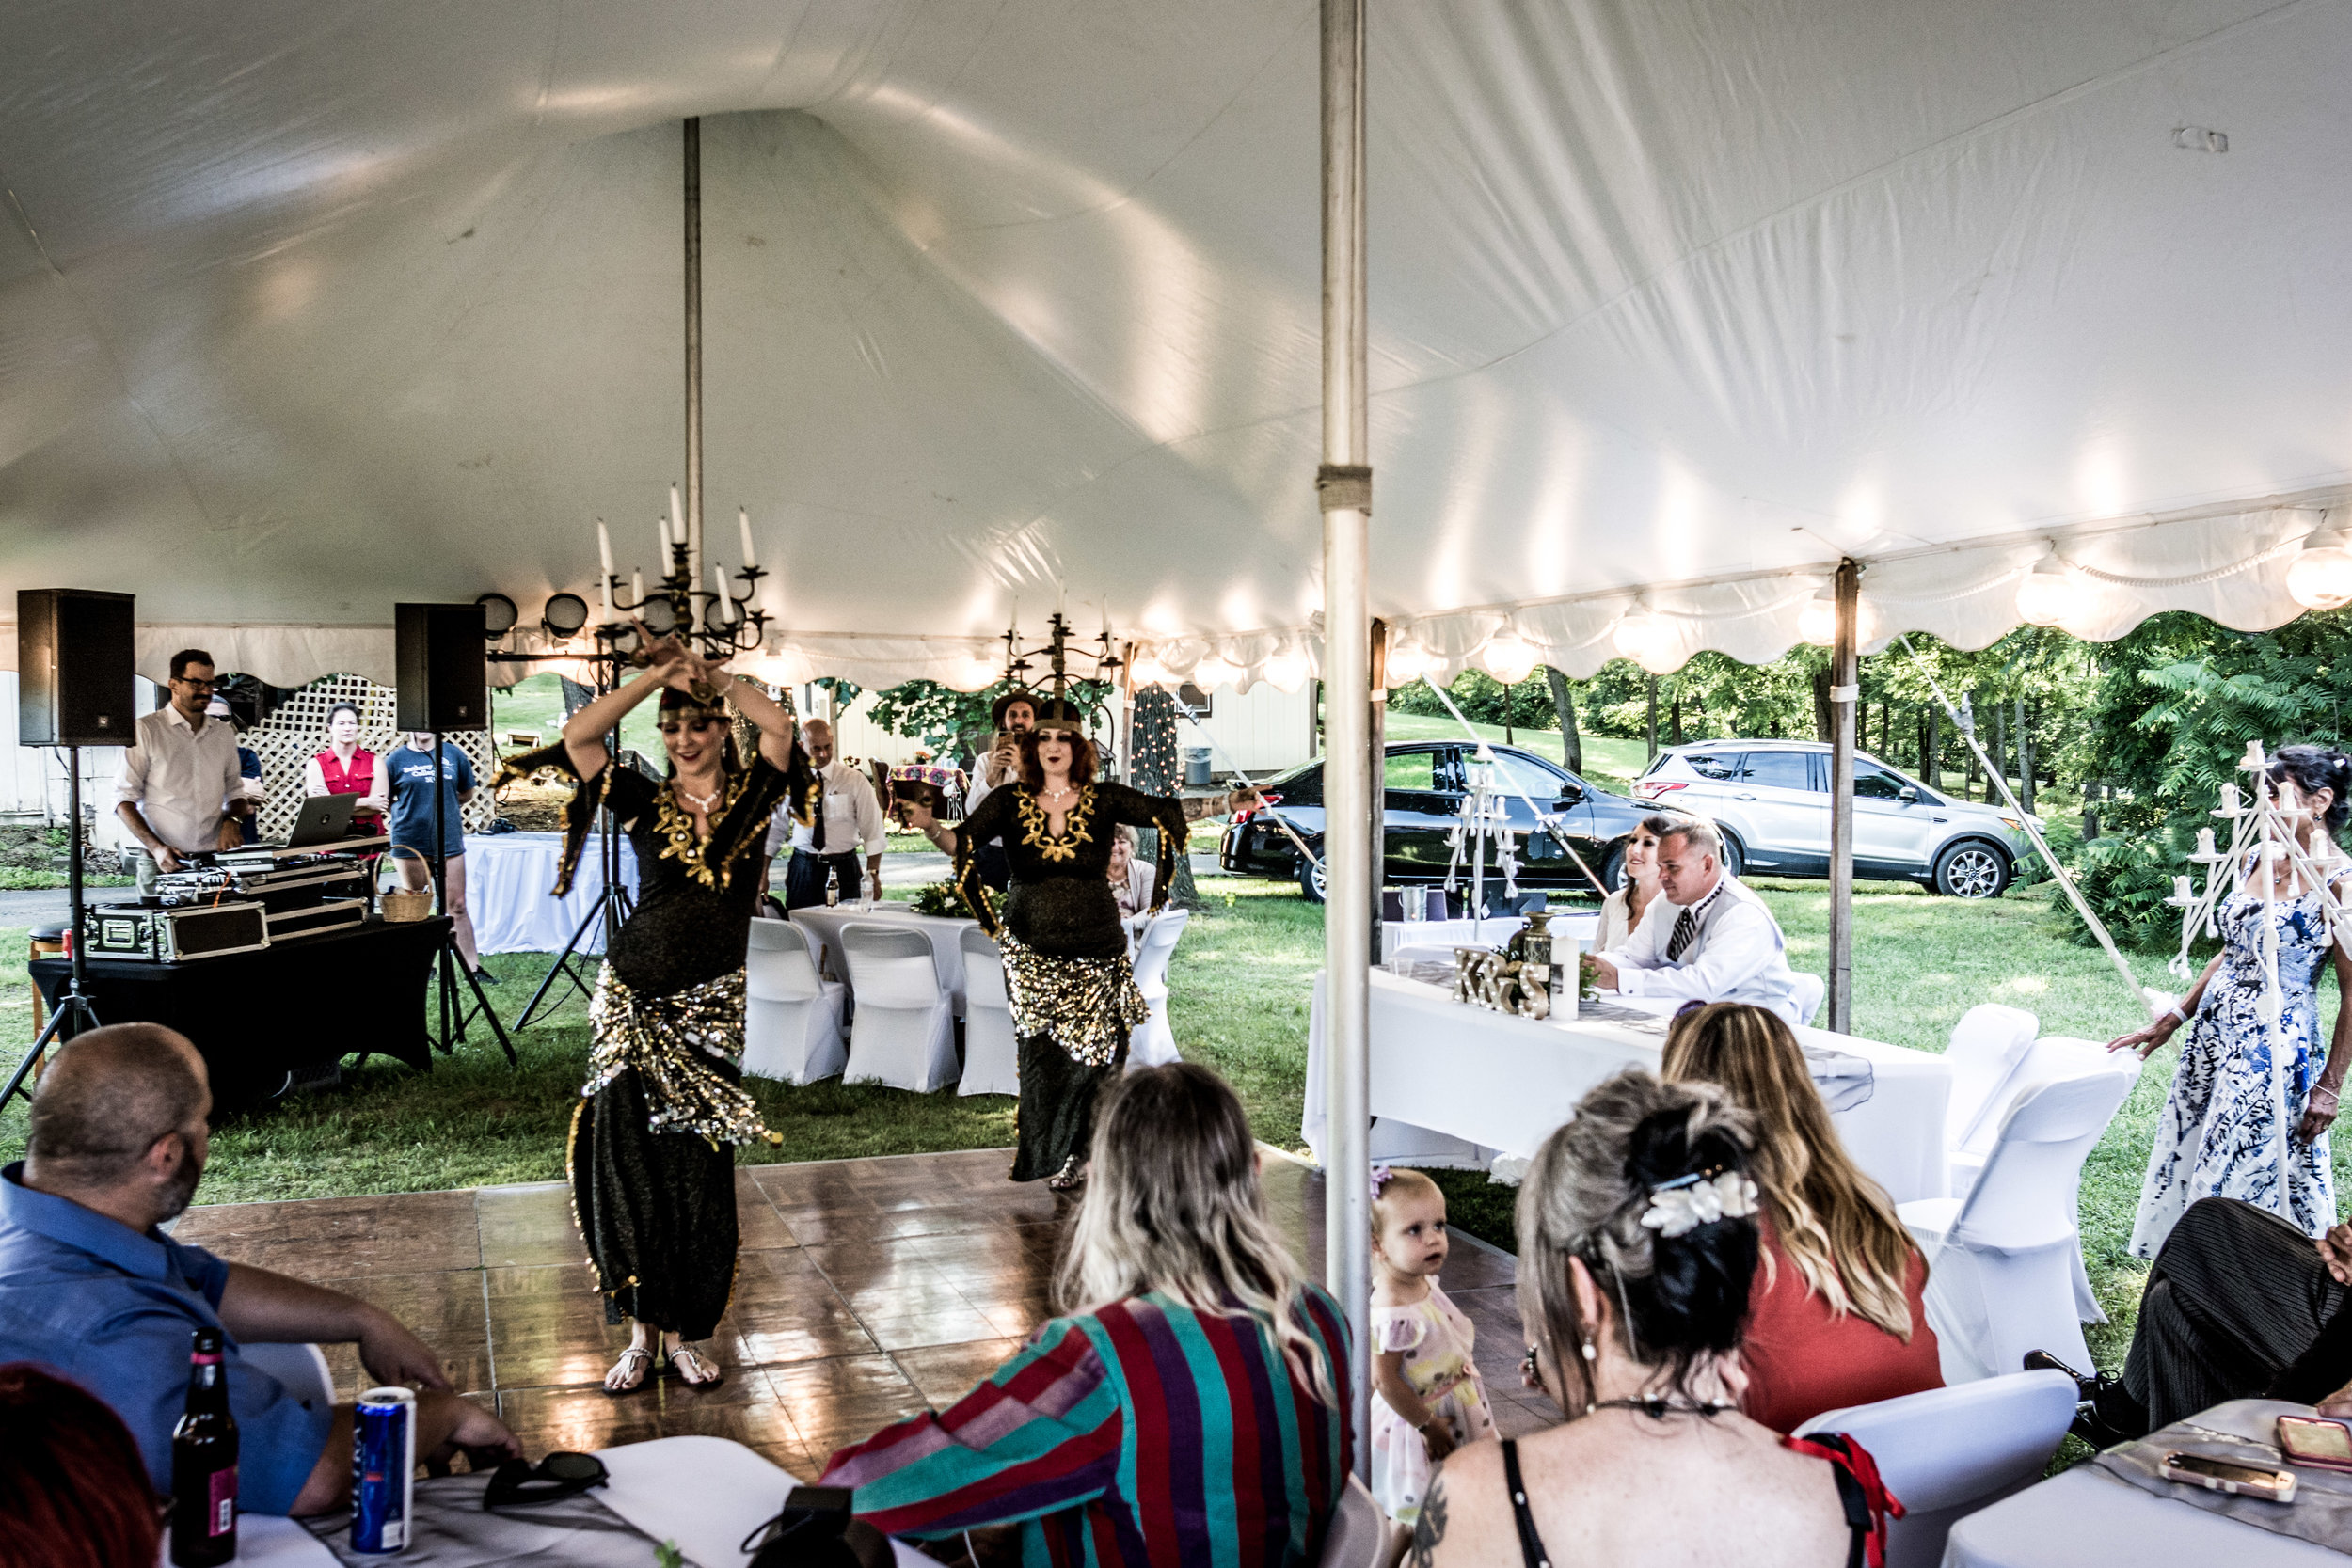 2018.06.22 Hardy-Baty Wedding Weekend in the Virginia Countryside-160.jpg